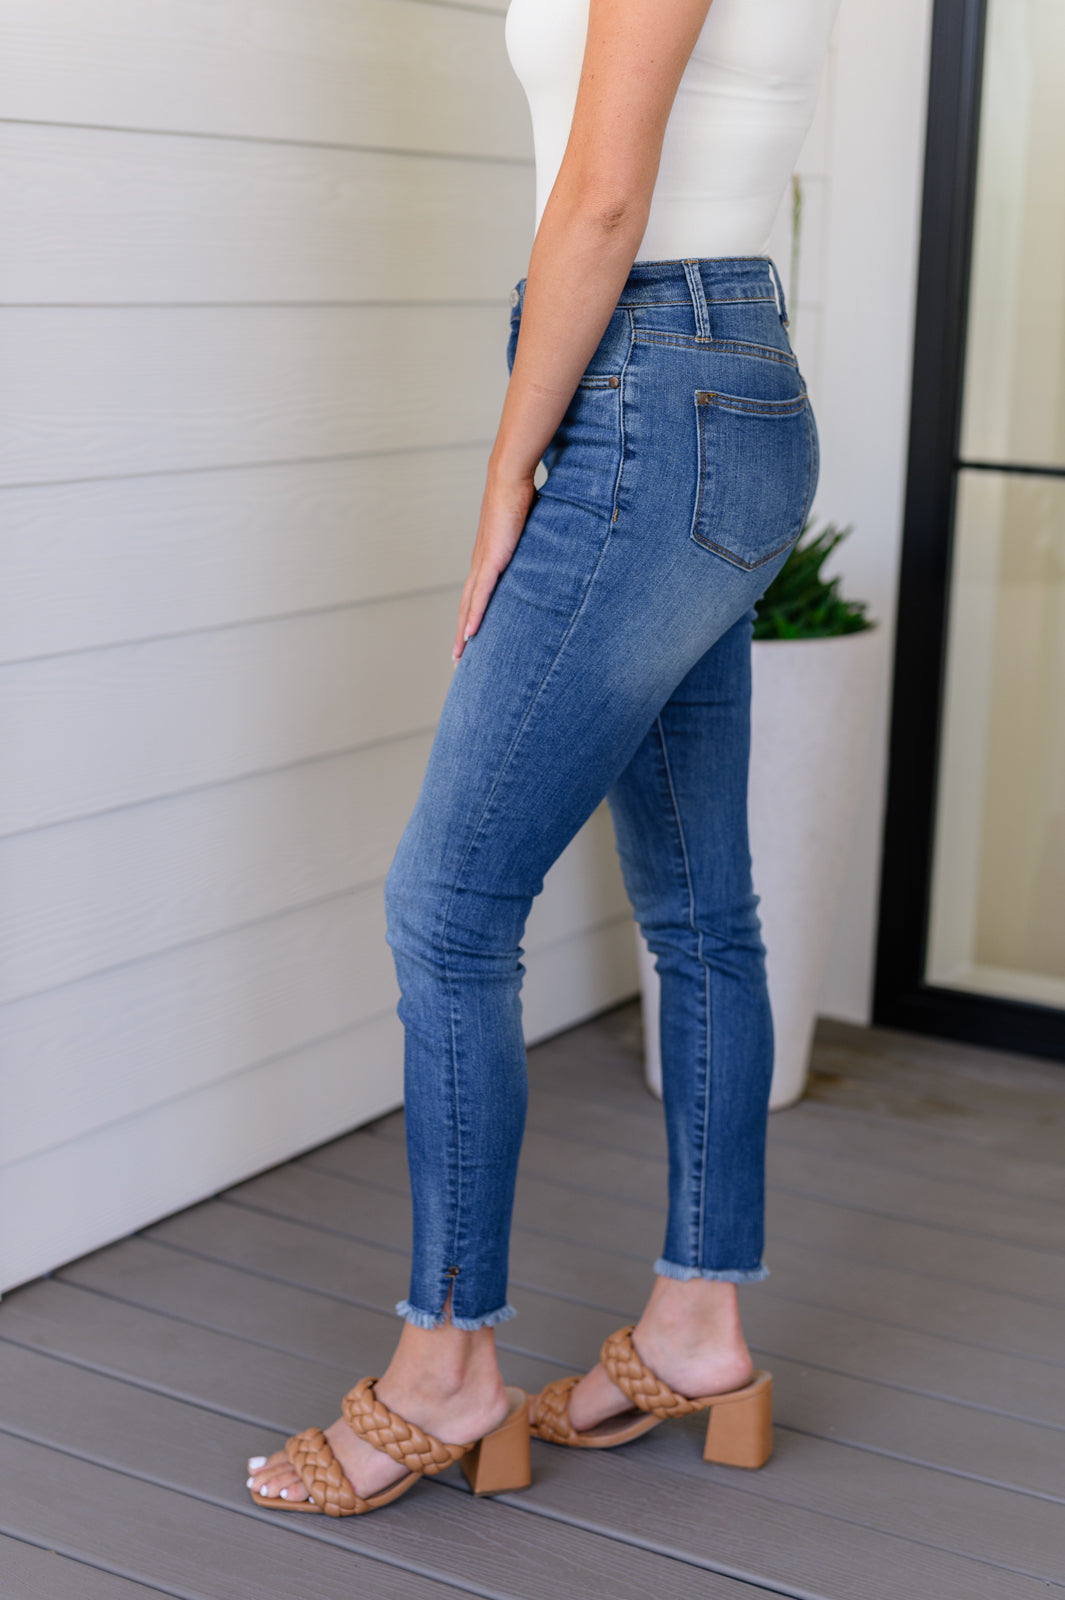 Judy Blue Tummy Control Classic Skinny Jeans in Black – Ivory Gem